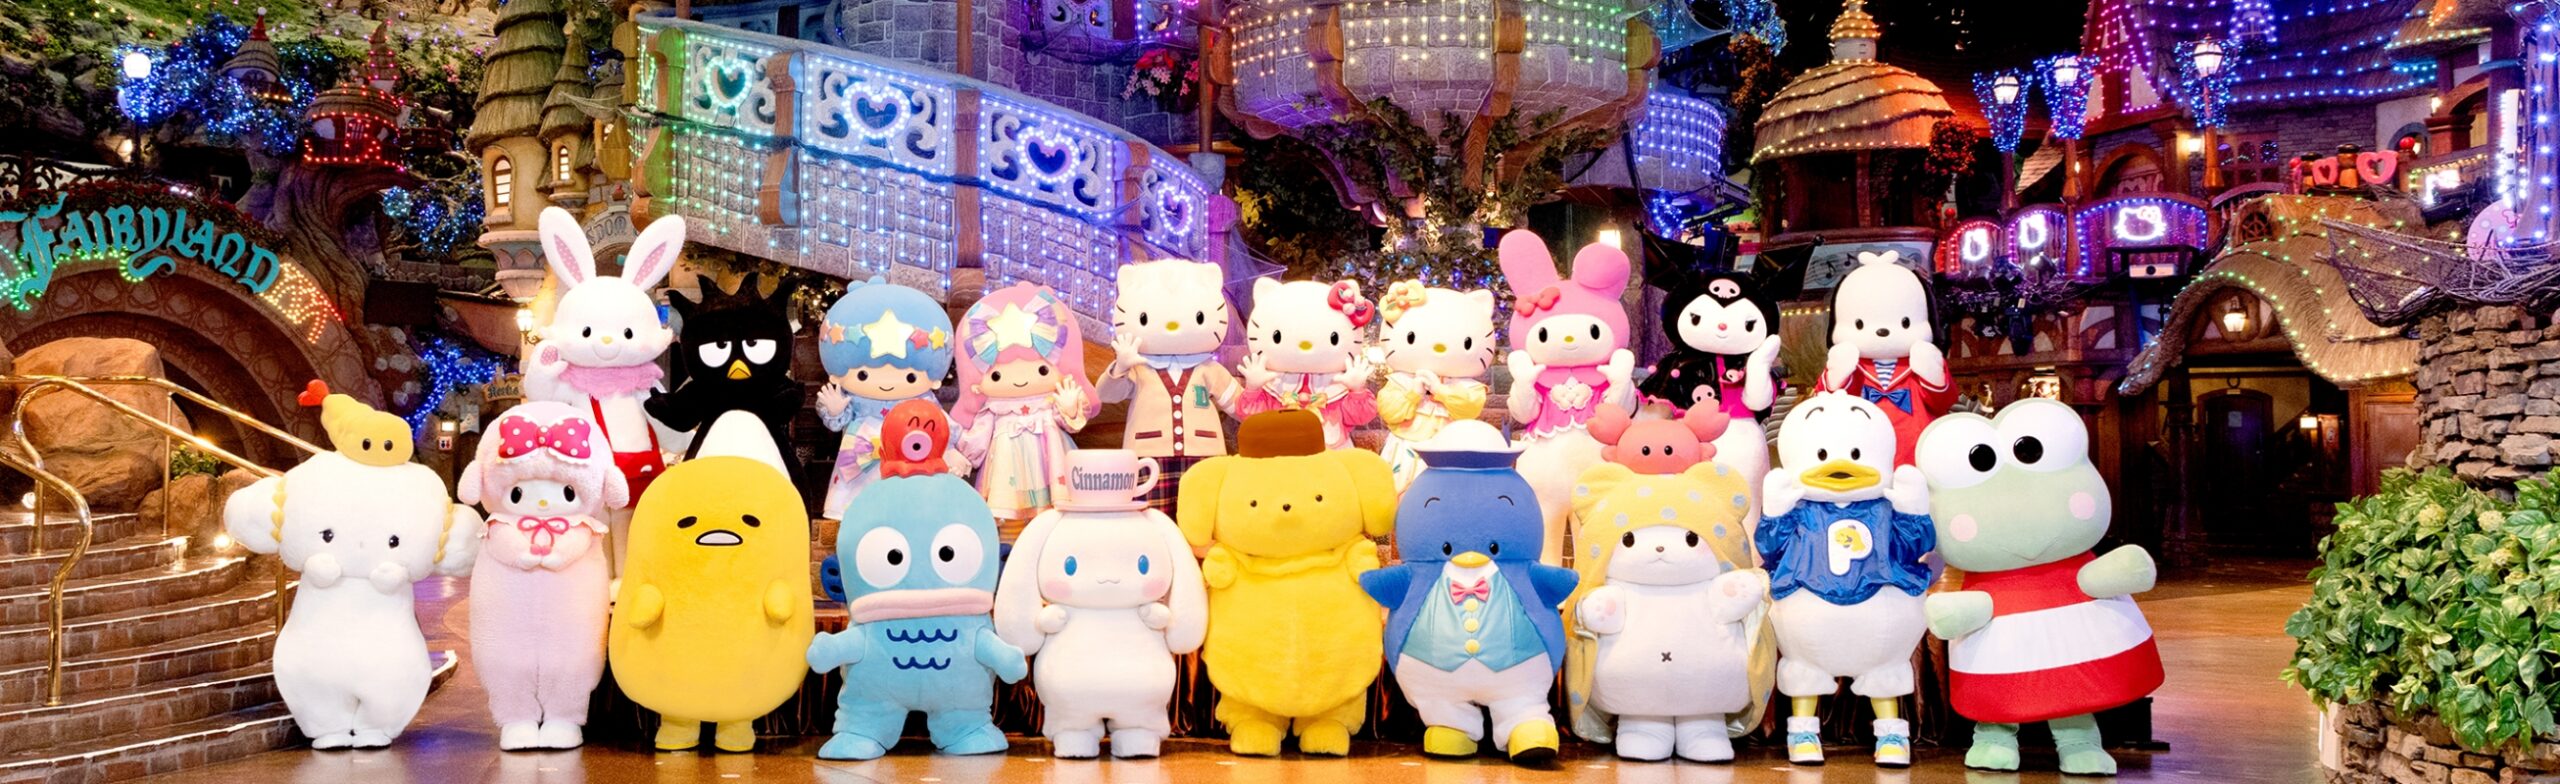 Sanrio Puroland: The Home of Hello Kitty! - Hello Lizzie Bee